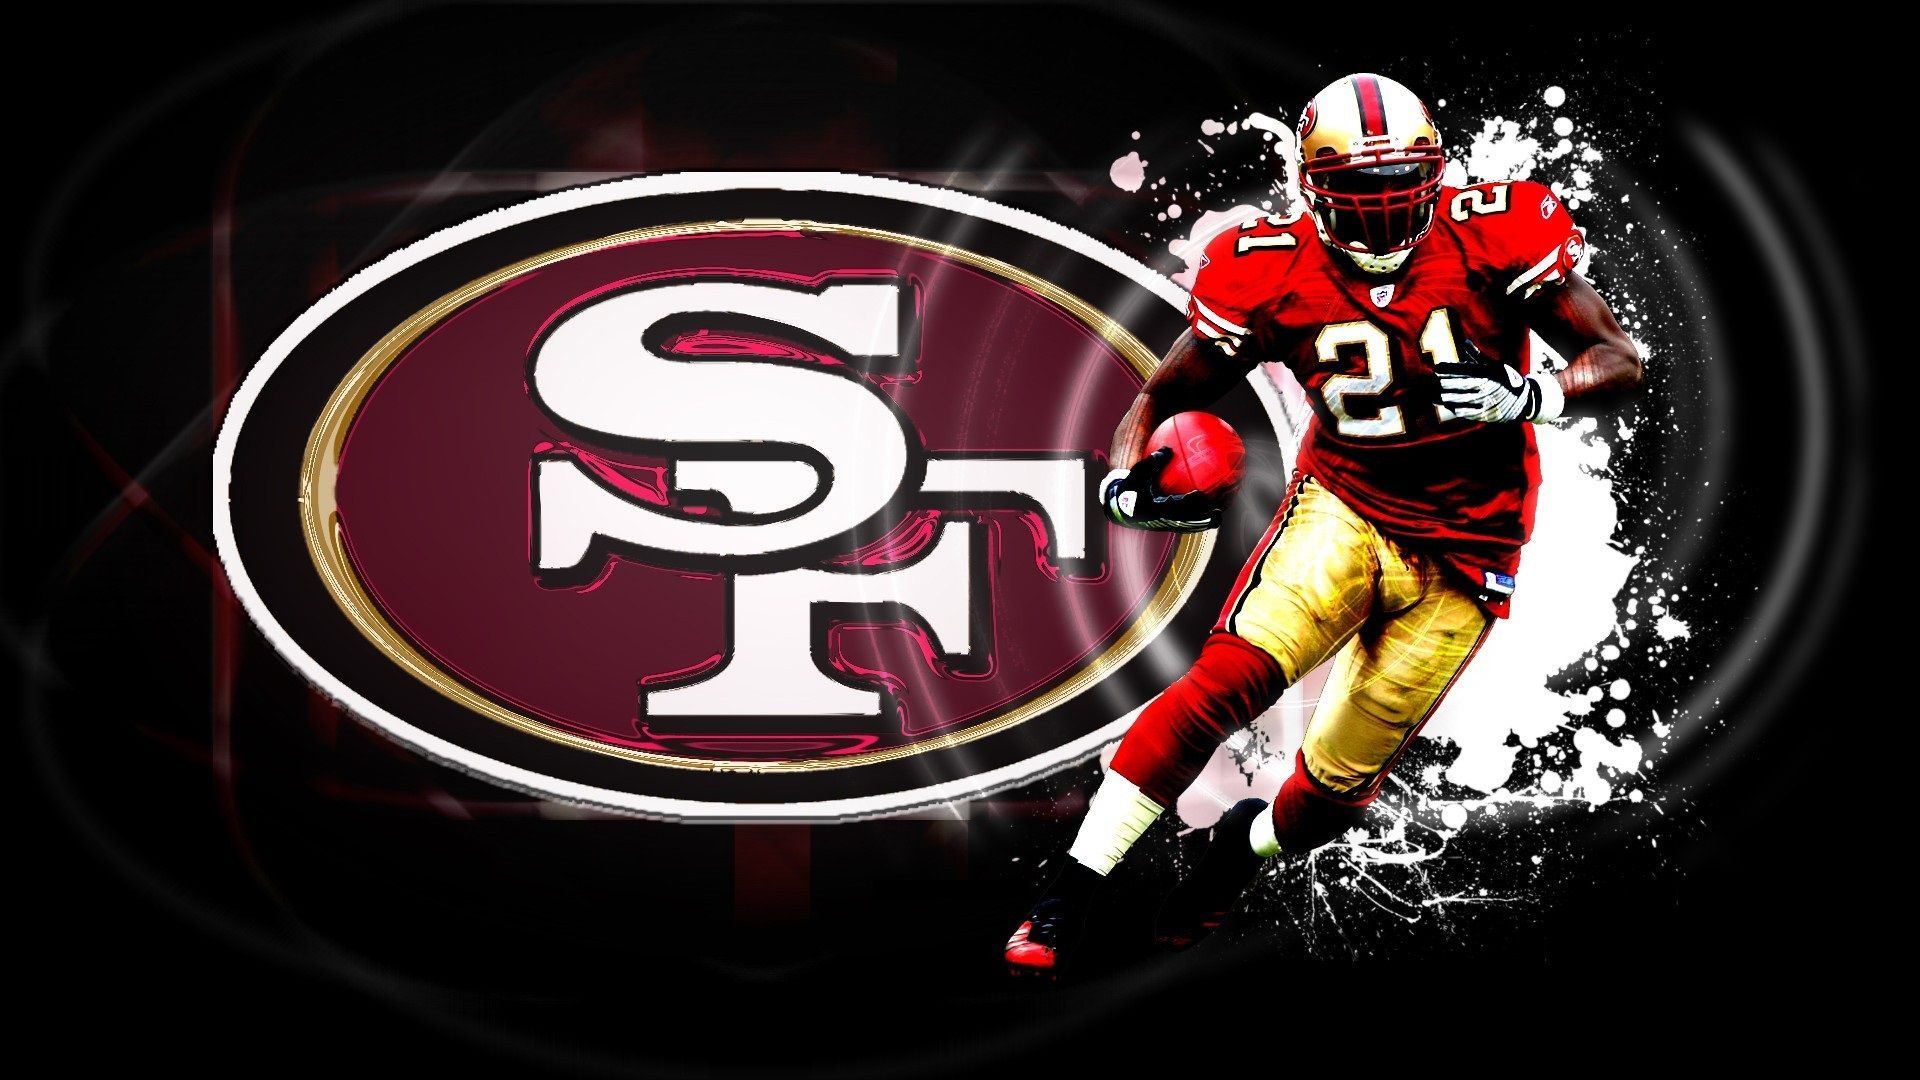 HD San Francisco 49ers Background NFL Football Wallpaper. San francisco 49ers, Football wallpaper, San francisco 49ers logo